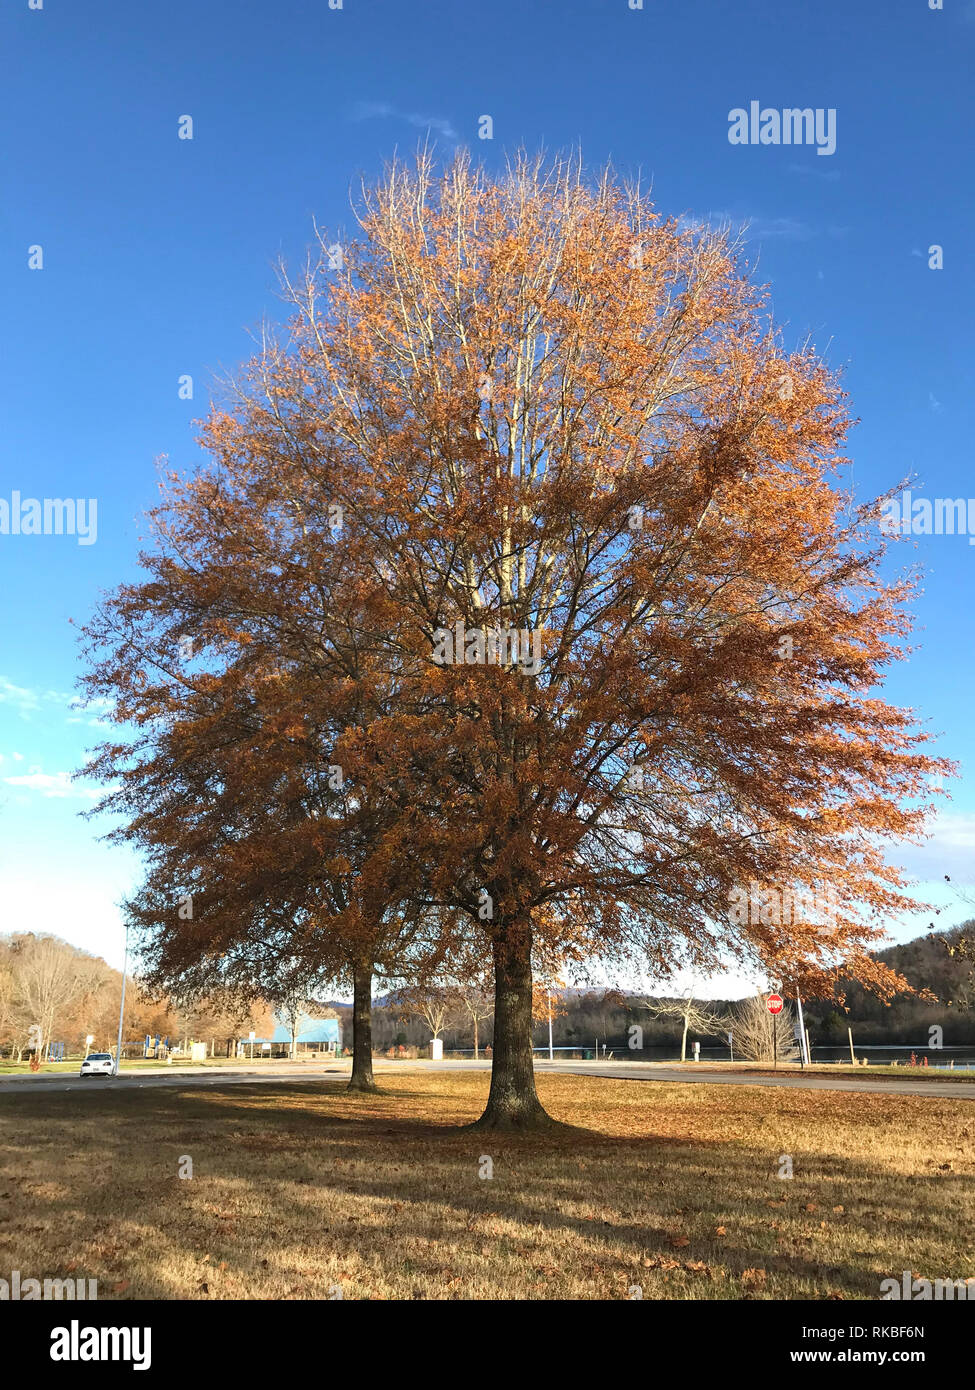 A fall foliage willow oak (Quercus phellos) tree at Oak Ridge Marina, Oak Ridge, Tennessee. Stock Photo